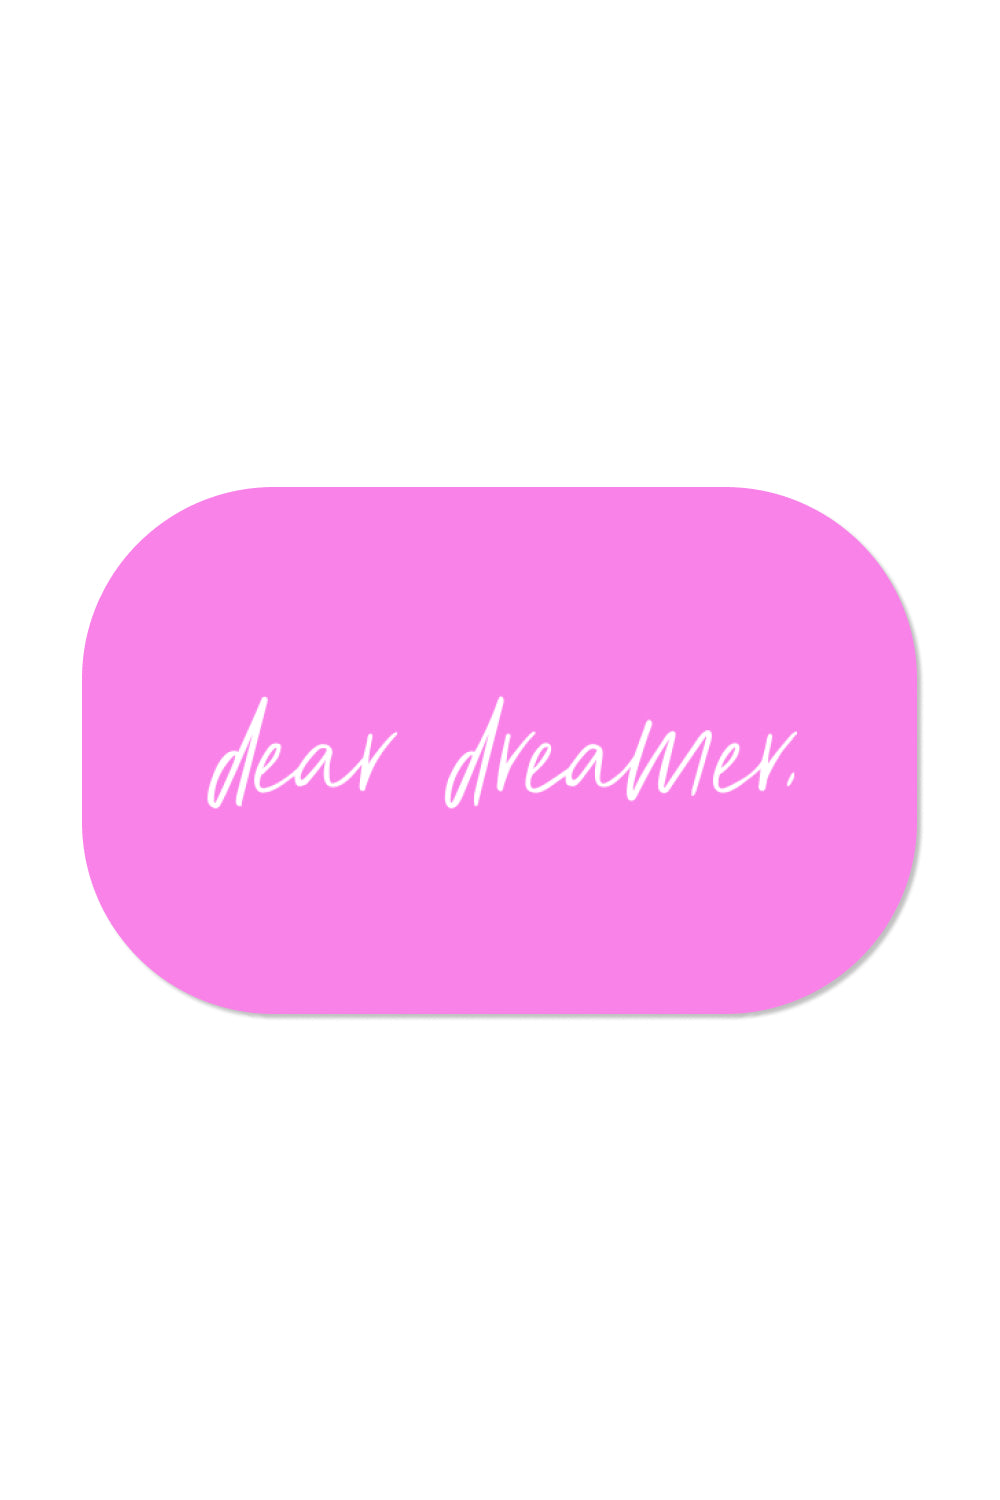 dear dreamer gift card